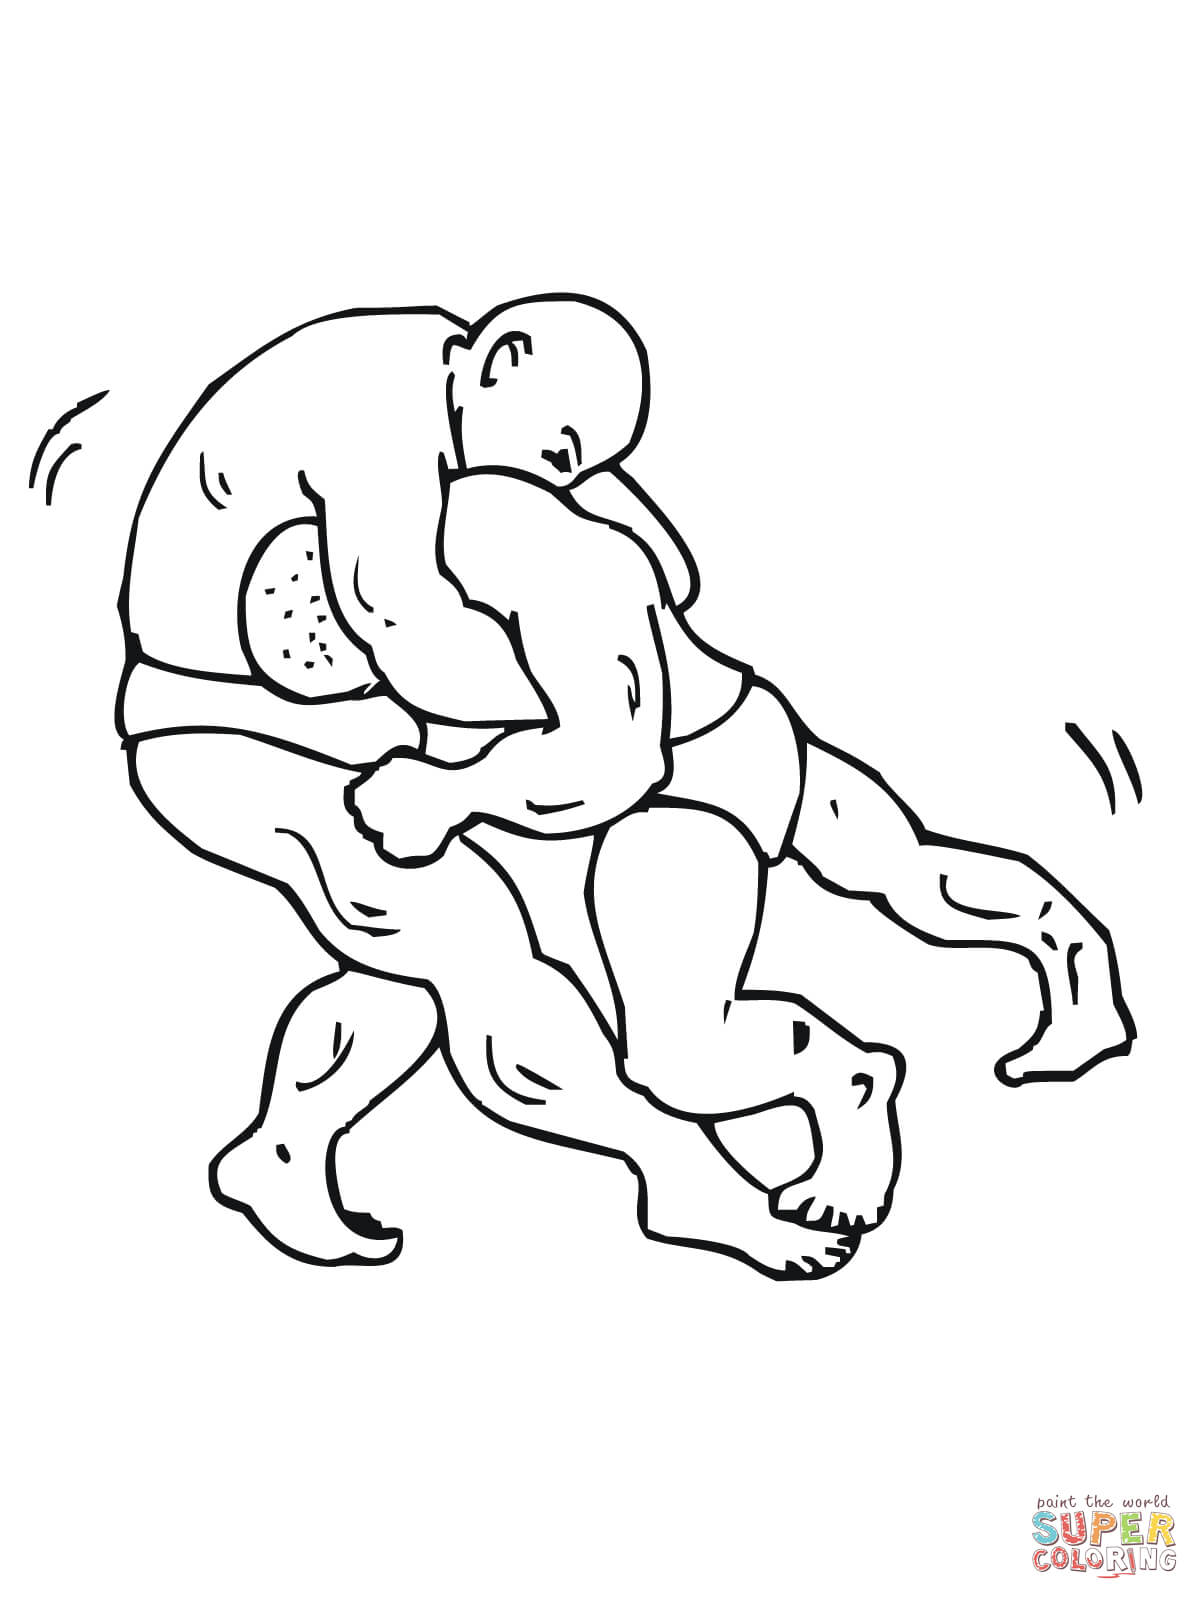 judo-coloring-page-0014-q1